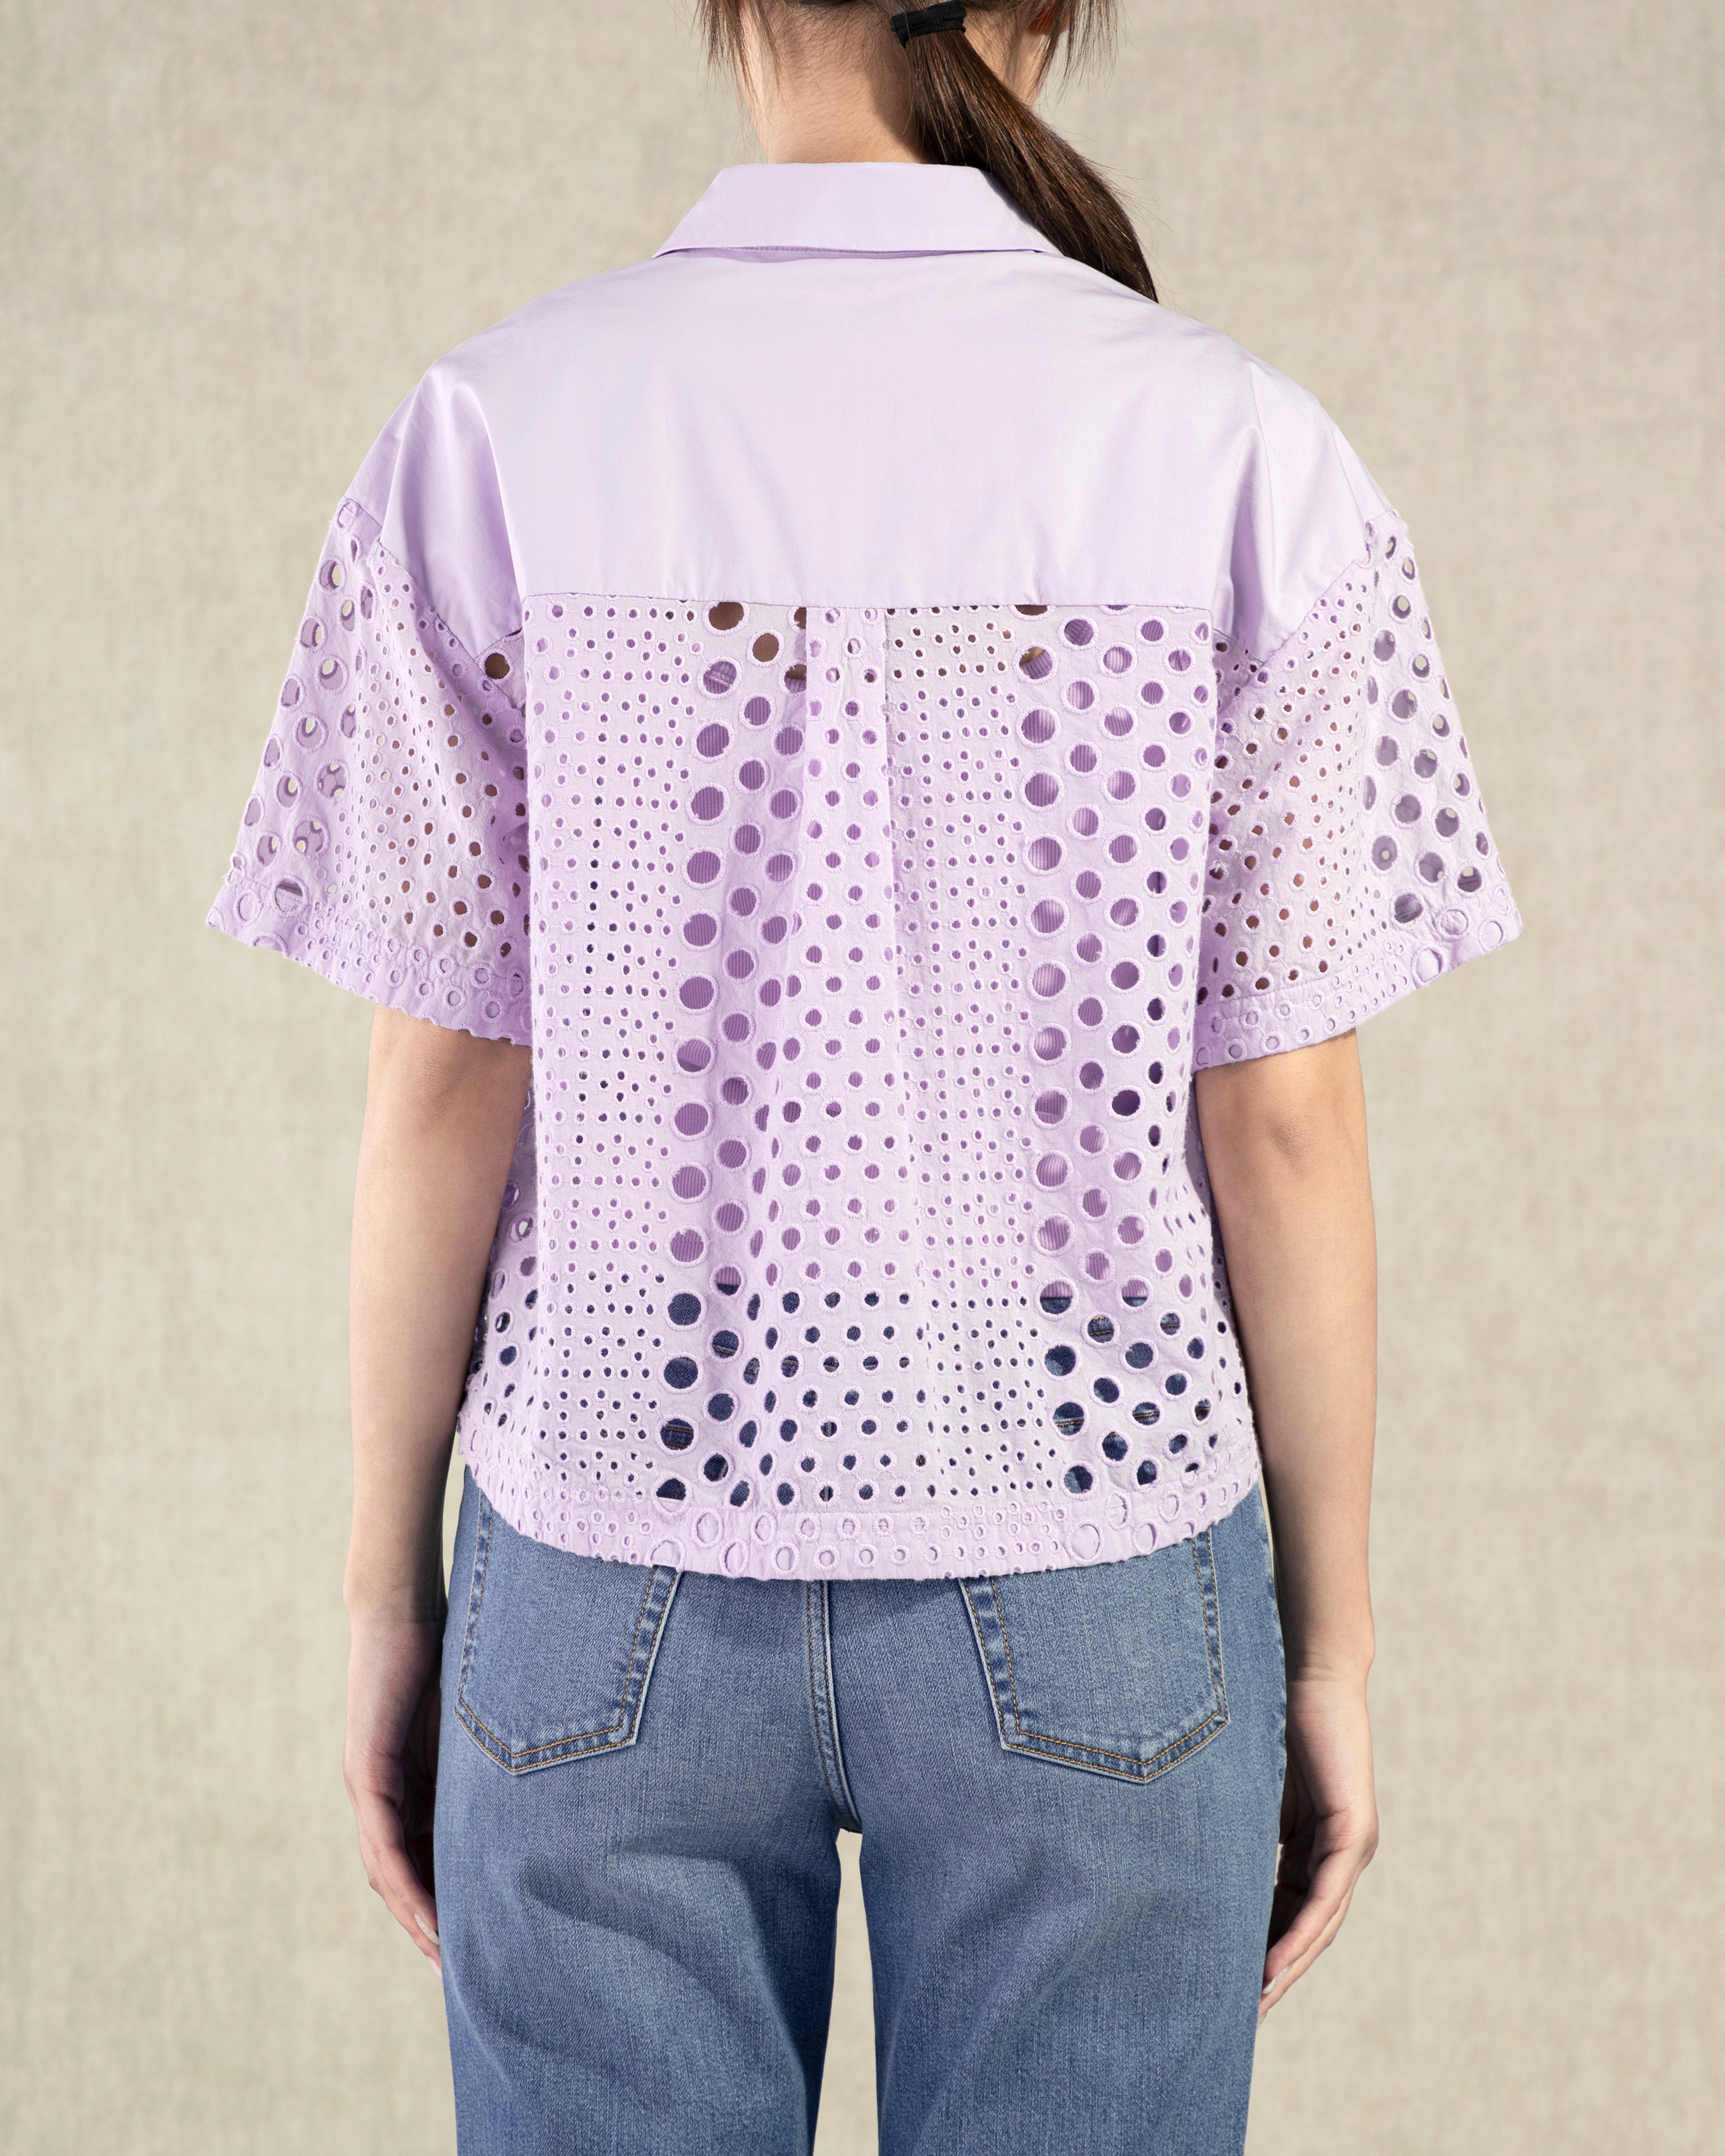 Pastel Lilac Lace Cropped Boxy Eyelet Shirt Womens Future Classics Collared Button Shirt